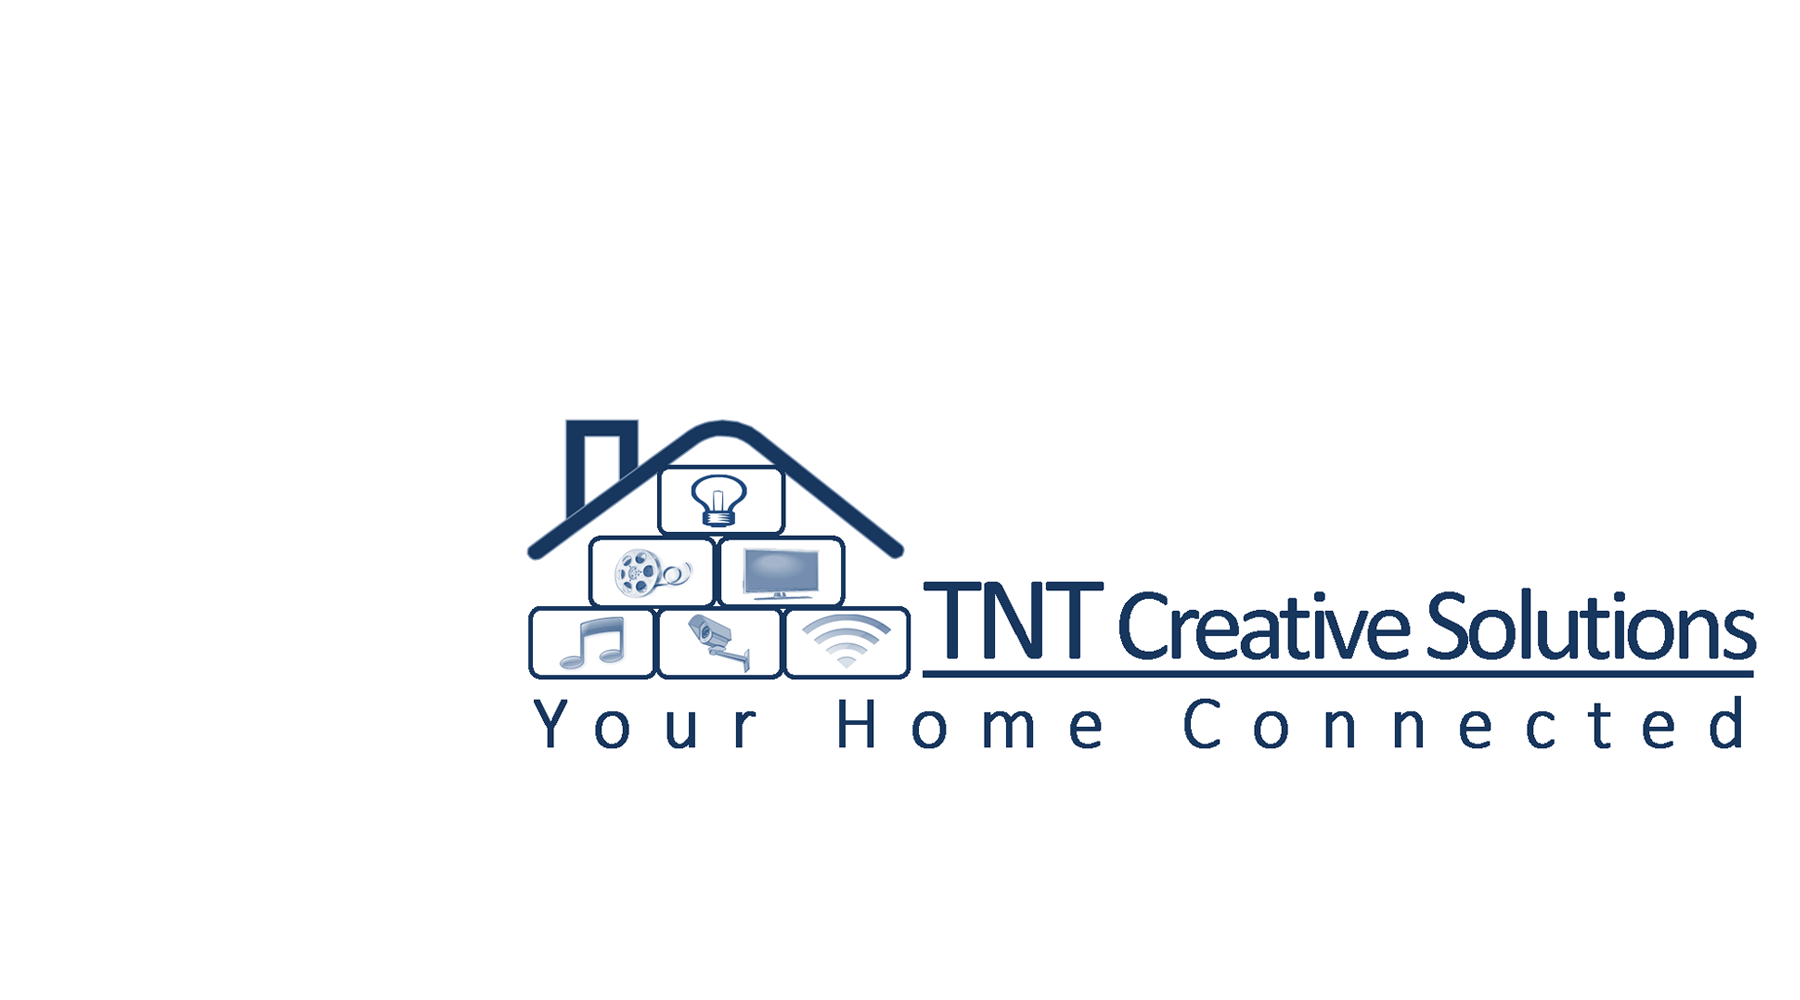 TNT Creative Solutions